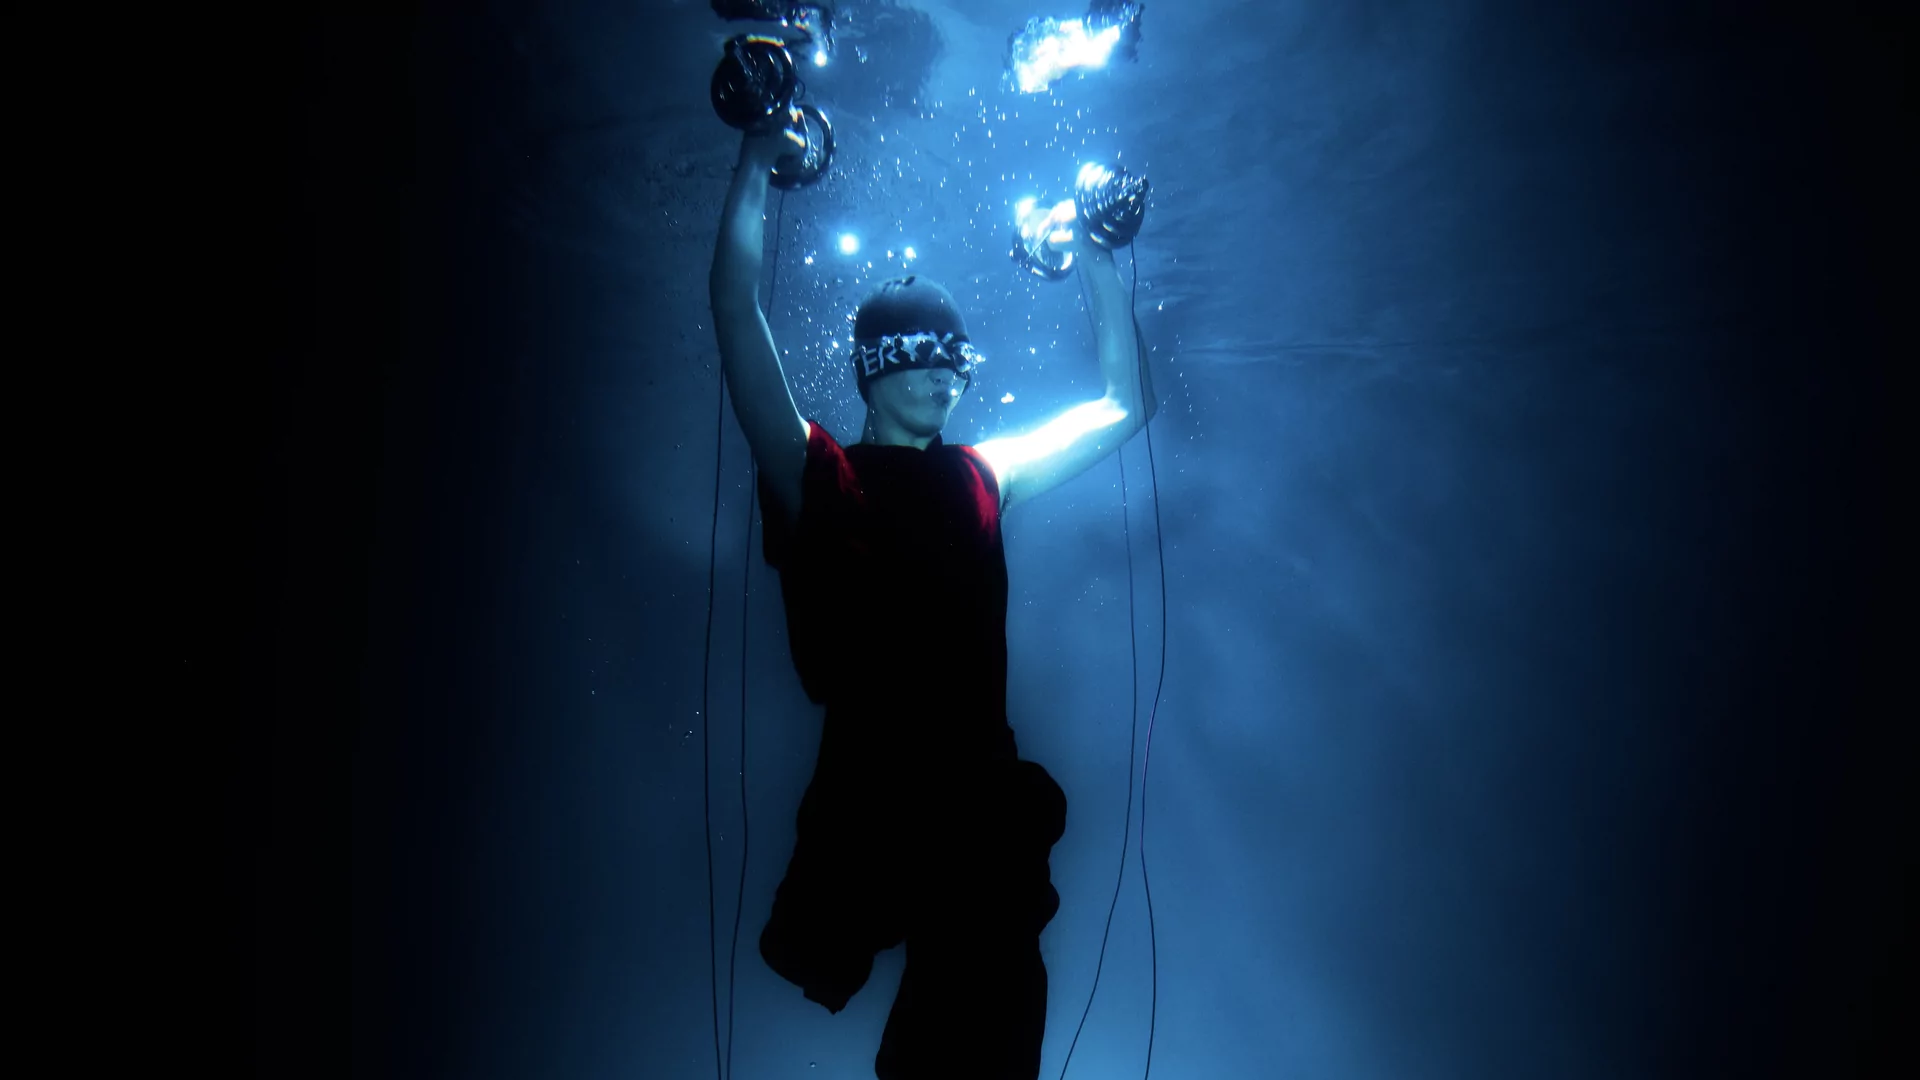 Photo of Tzusing underwater holding dumbbells above his head